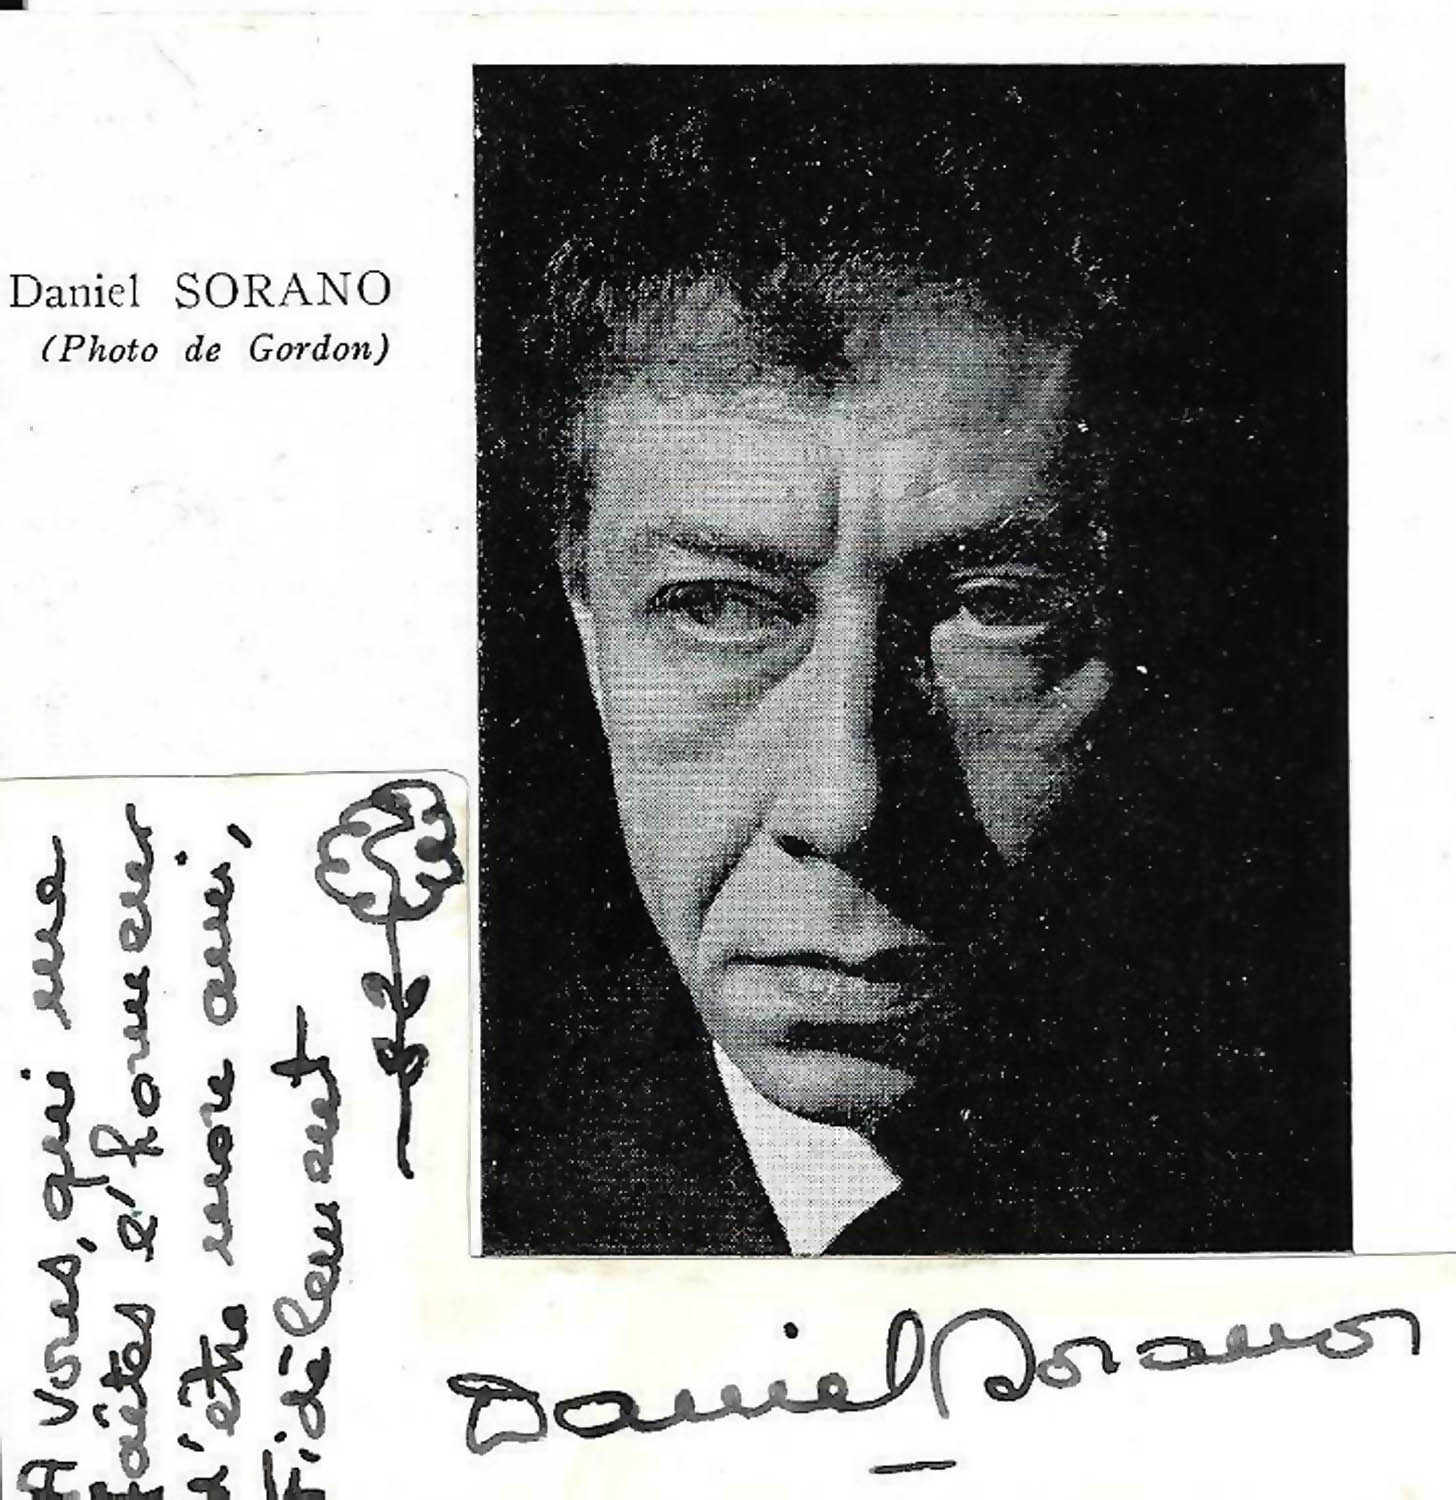 Daniel Sorano